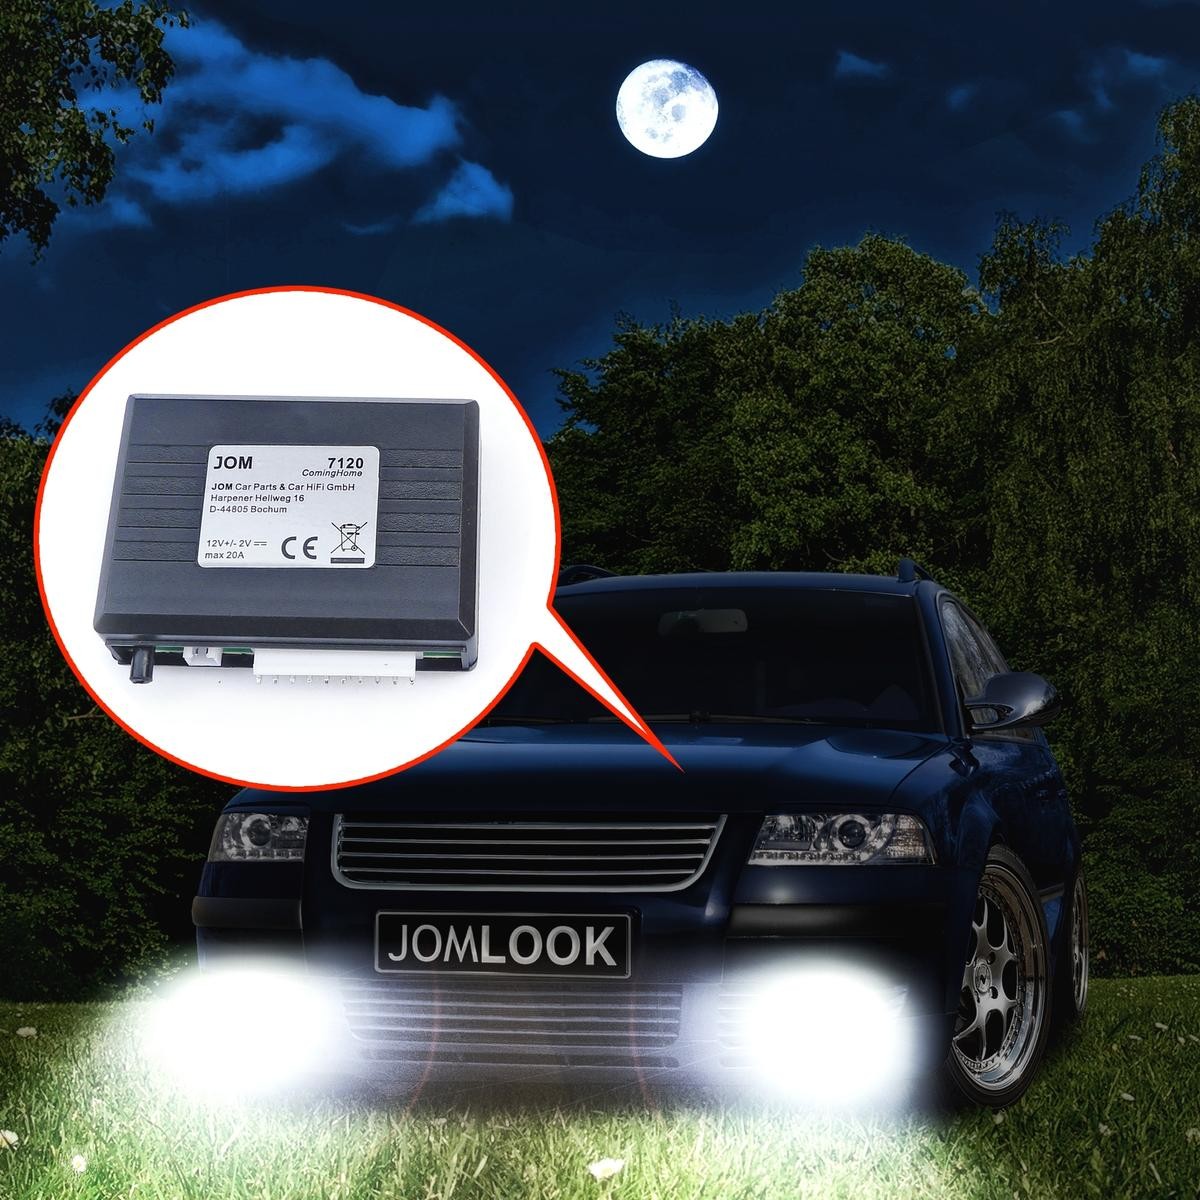 JOM 7120 Central locking system BMW E46 330xd 3.0 204 hp Diesel 2003 price